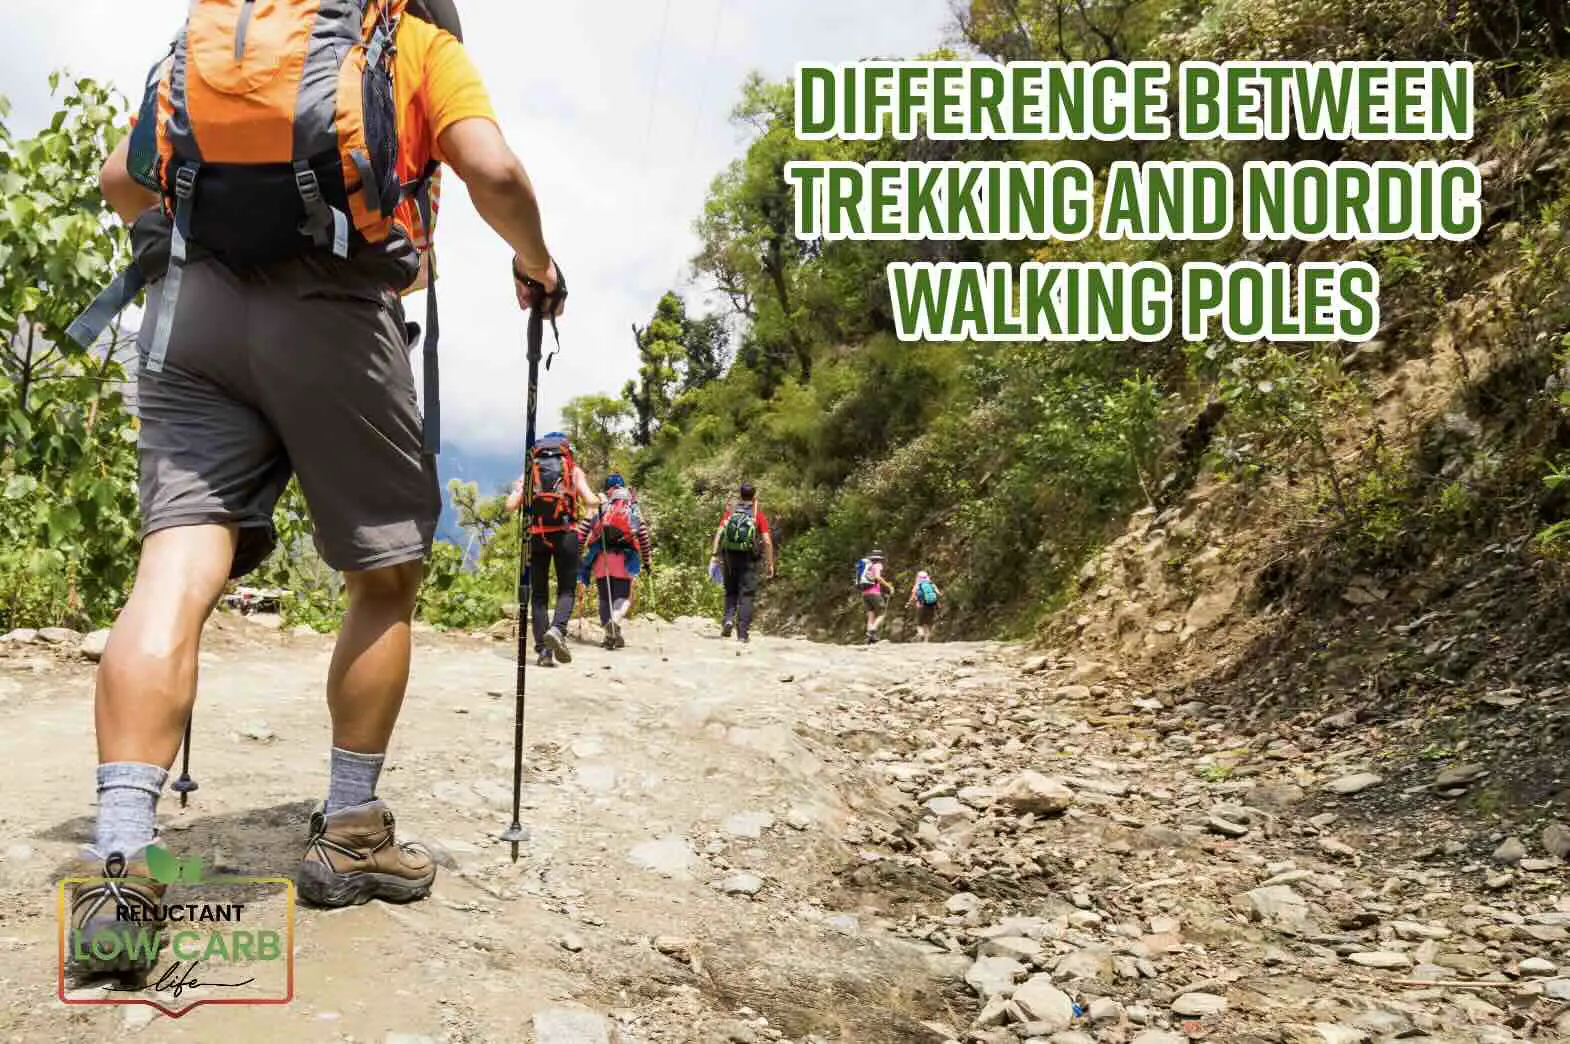 Difference Between Trekking And Nordic Walking Poles